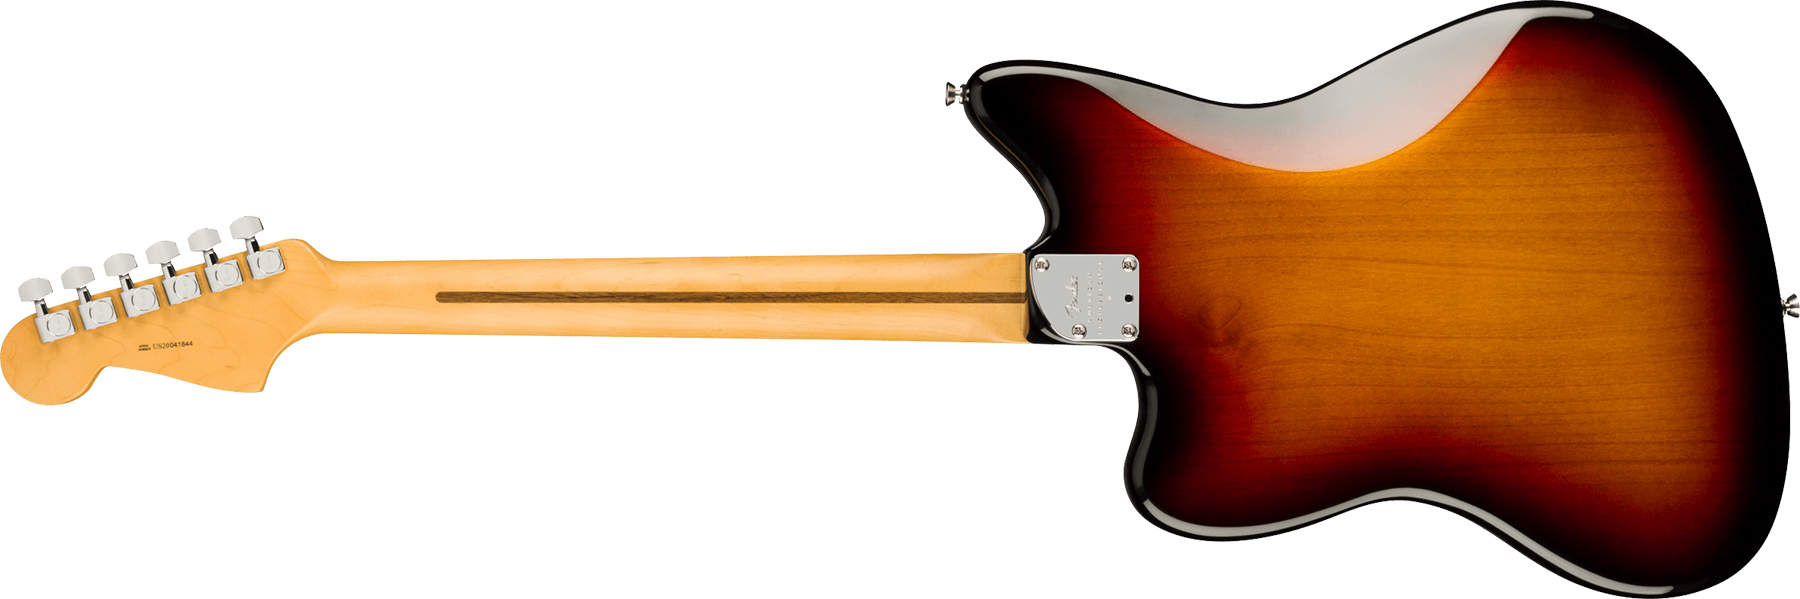 Fender Jazzmaster American Professional Ii Lh Gaucher Usa Rw - 3-color Sunburst - Left-handed electric guitar - Variation 1